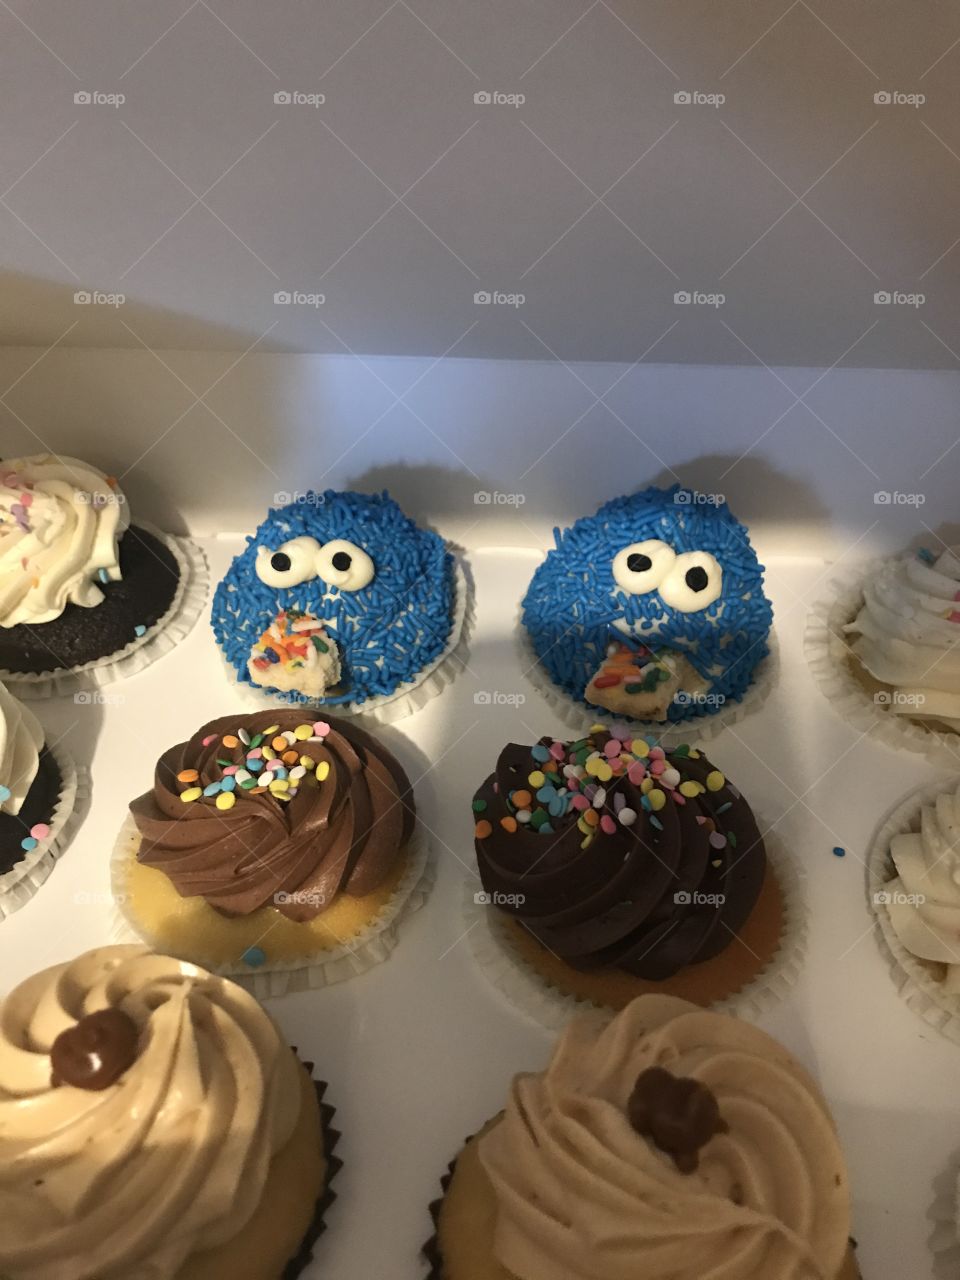 Sad Cookie Monster cupcake